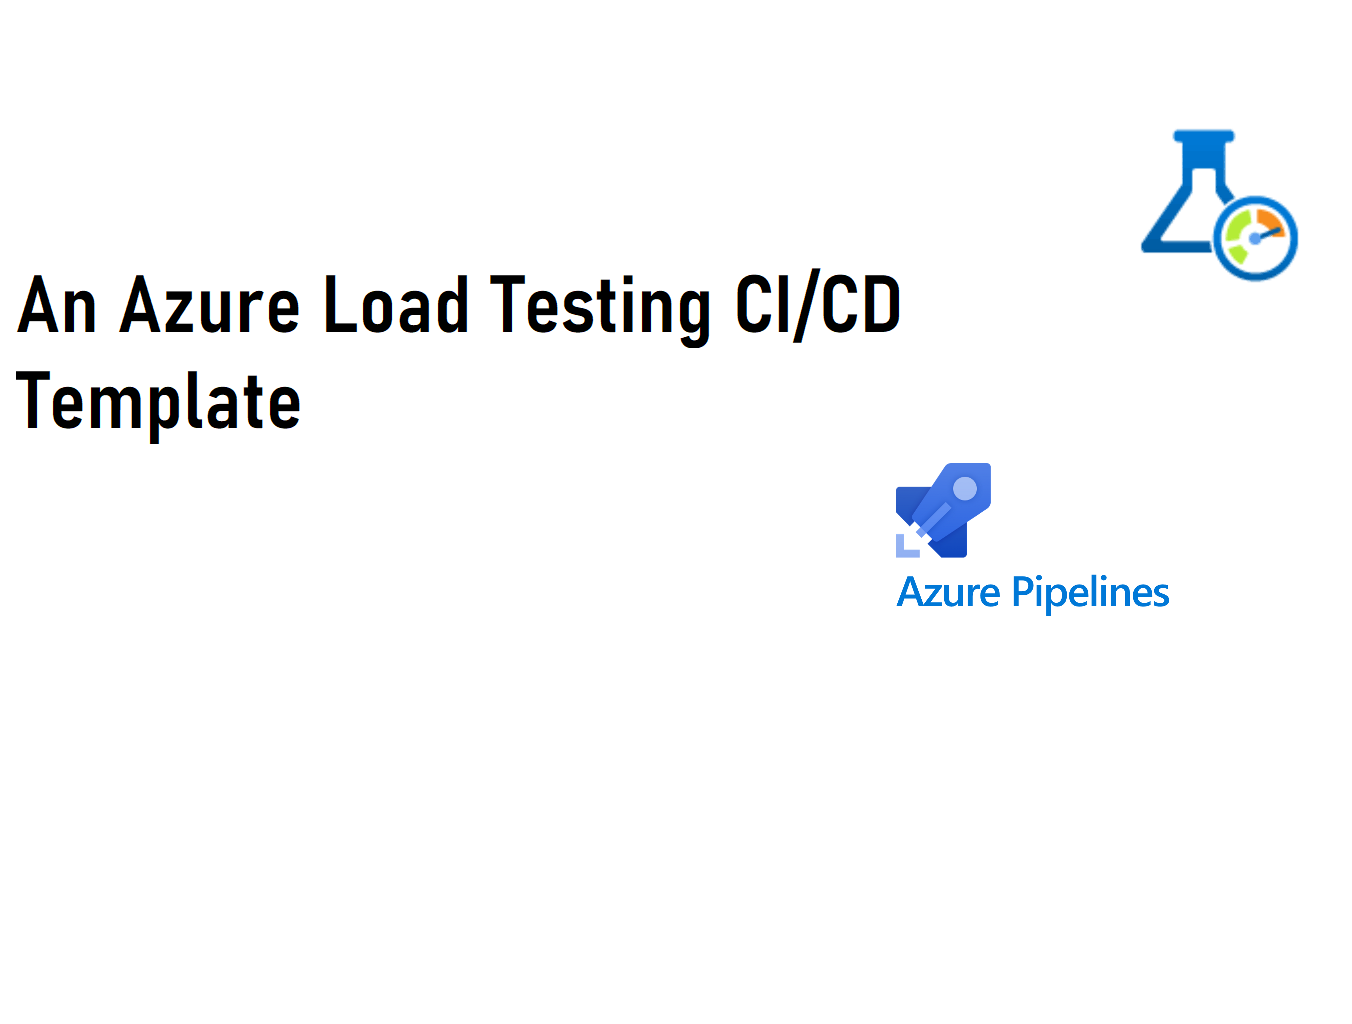 An Azure Load Testing CI/CD Template